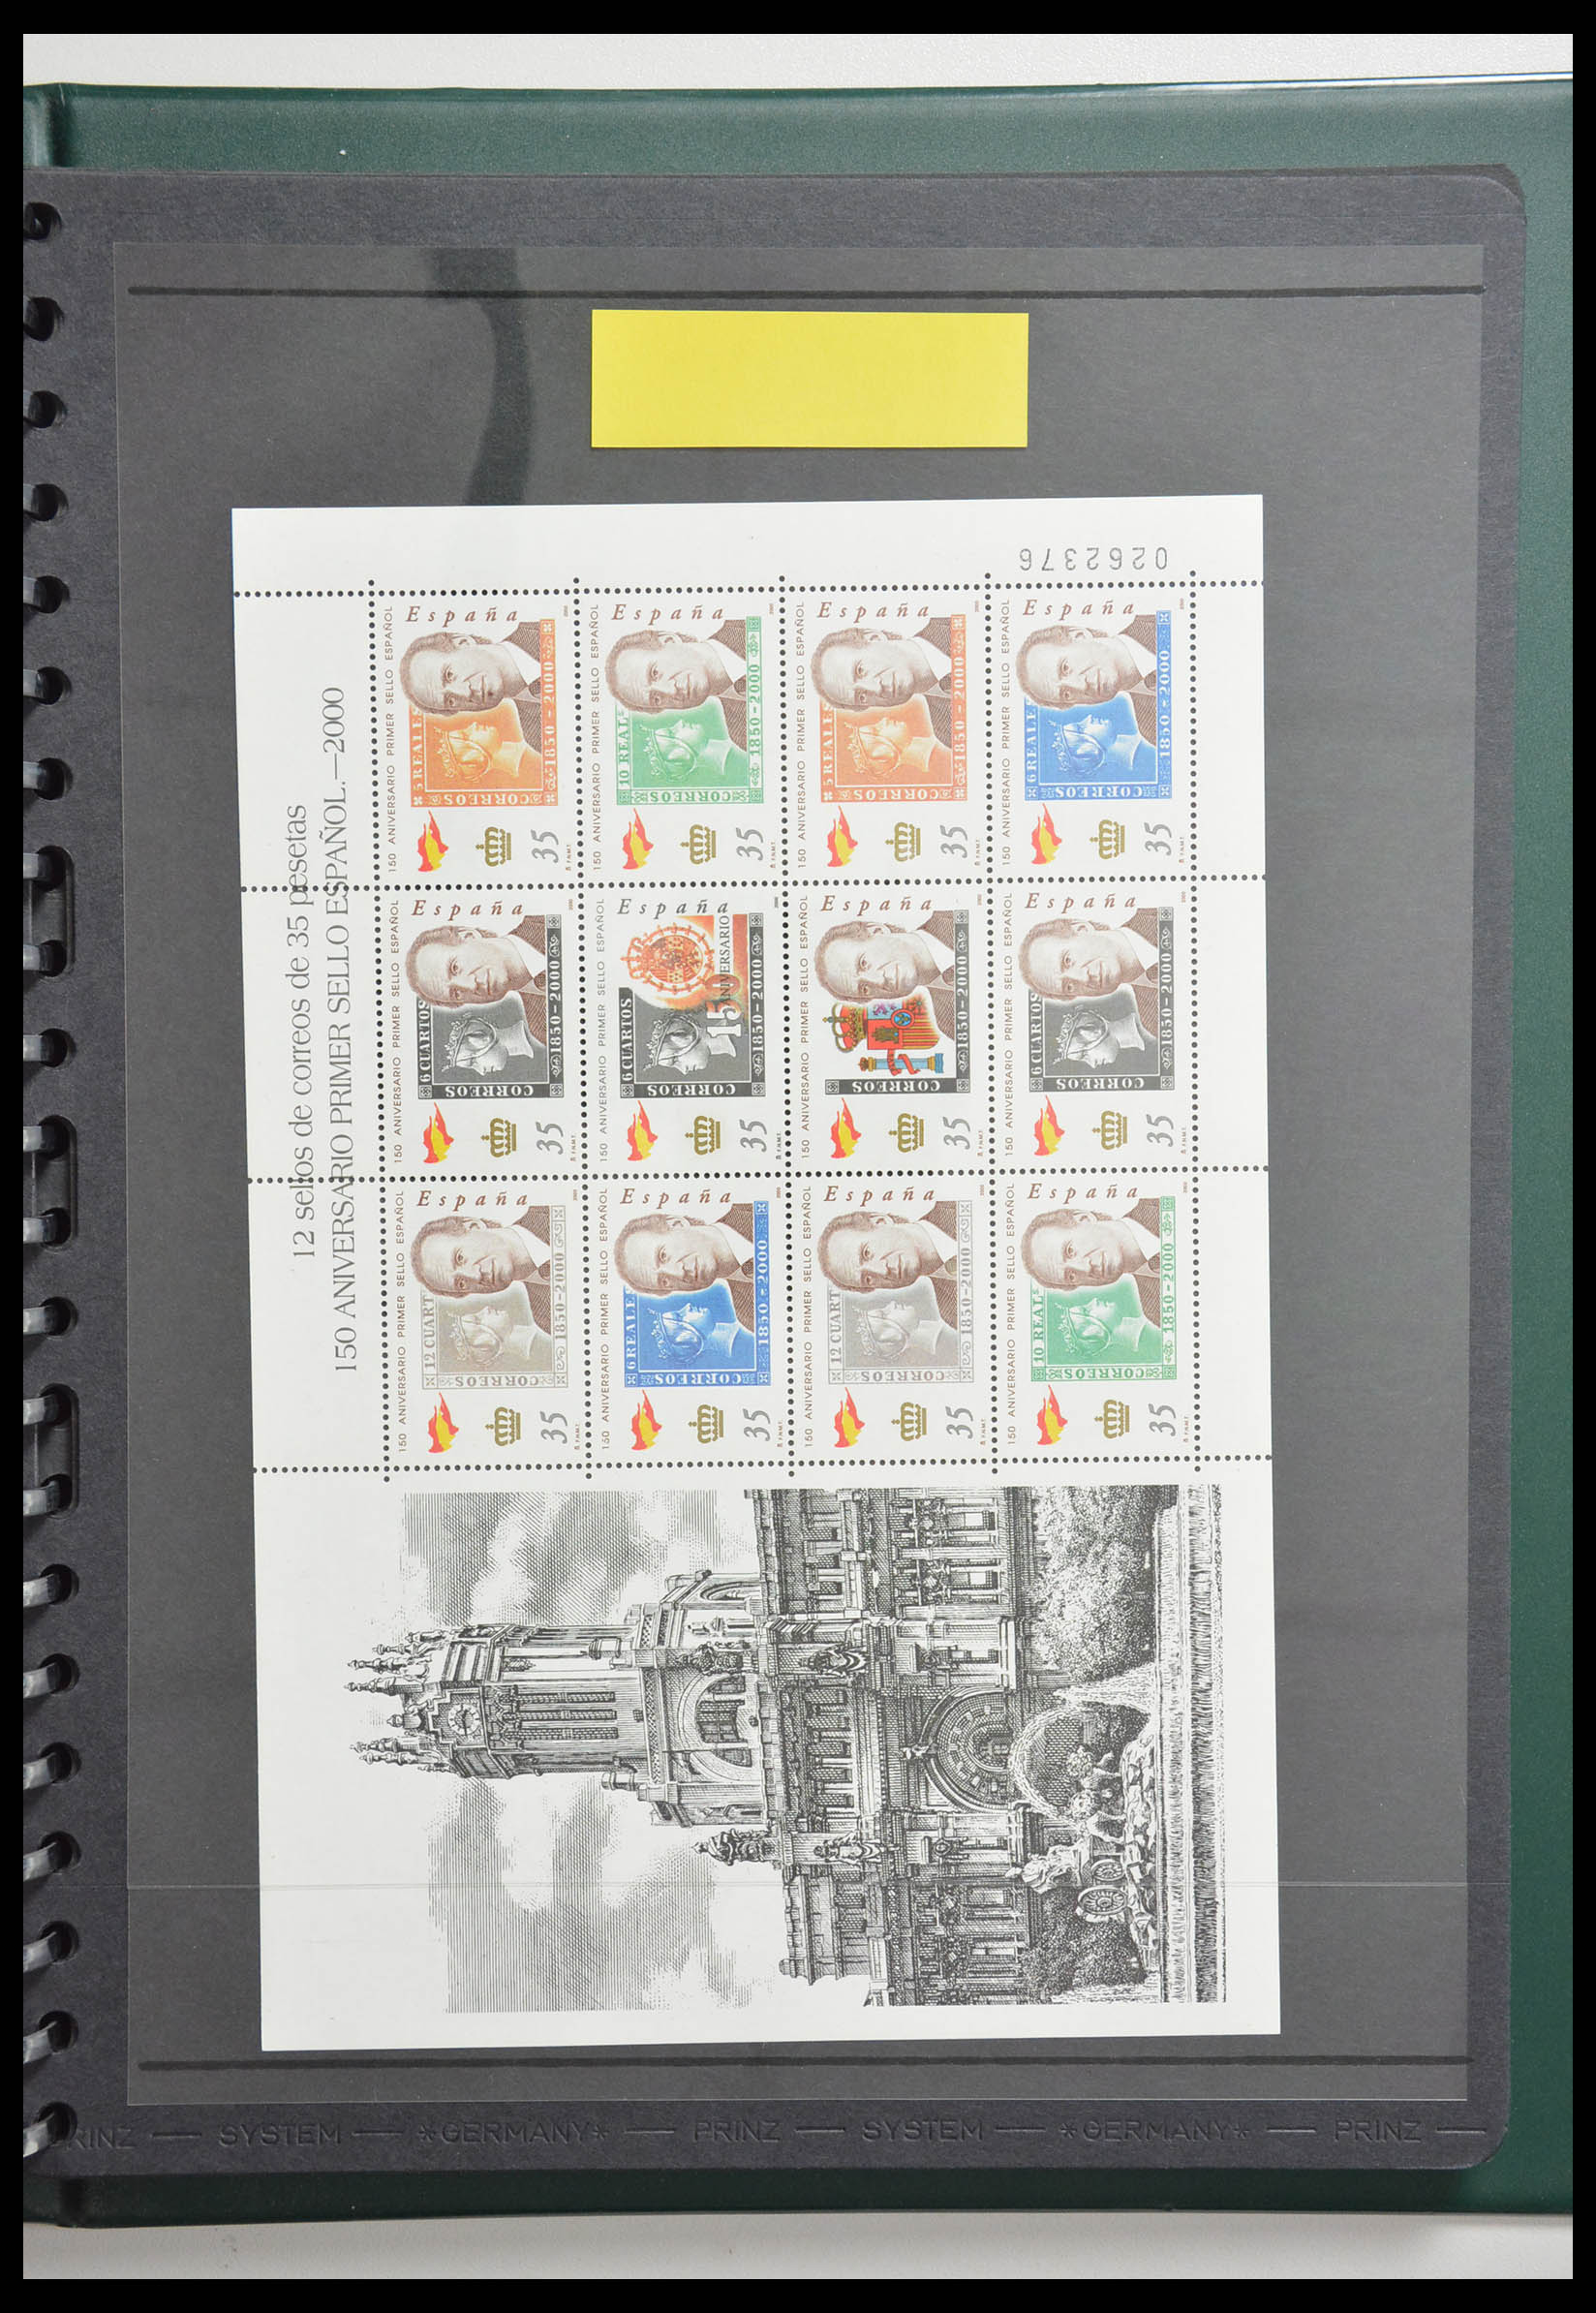 28337 032 - 28337 Postzegel op postzegel 1840-2001.